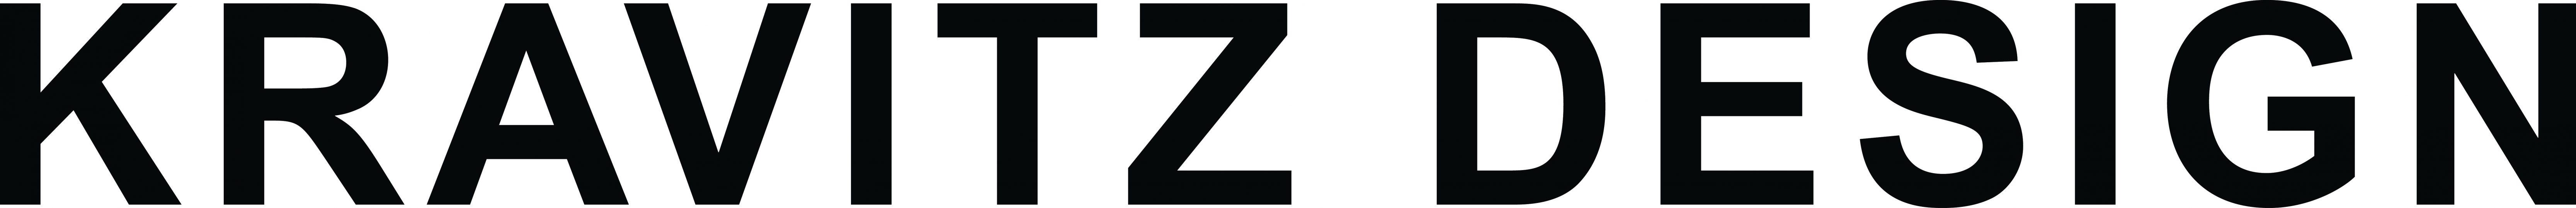 Kravitz Design Logo